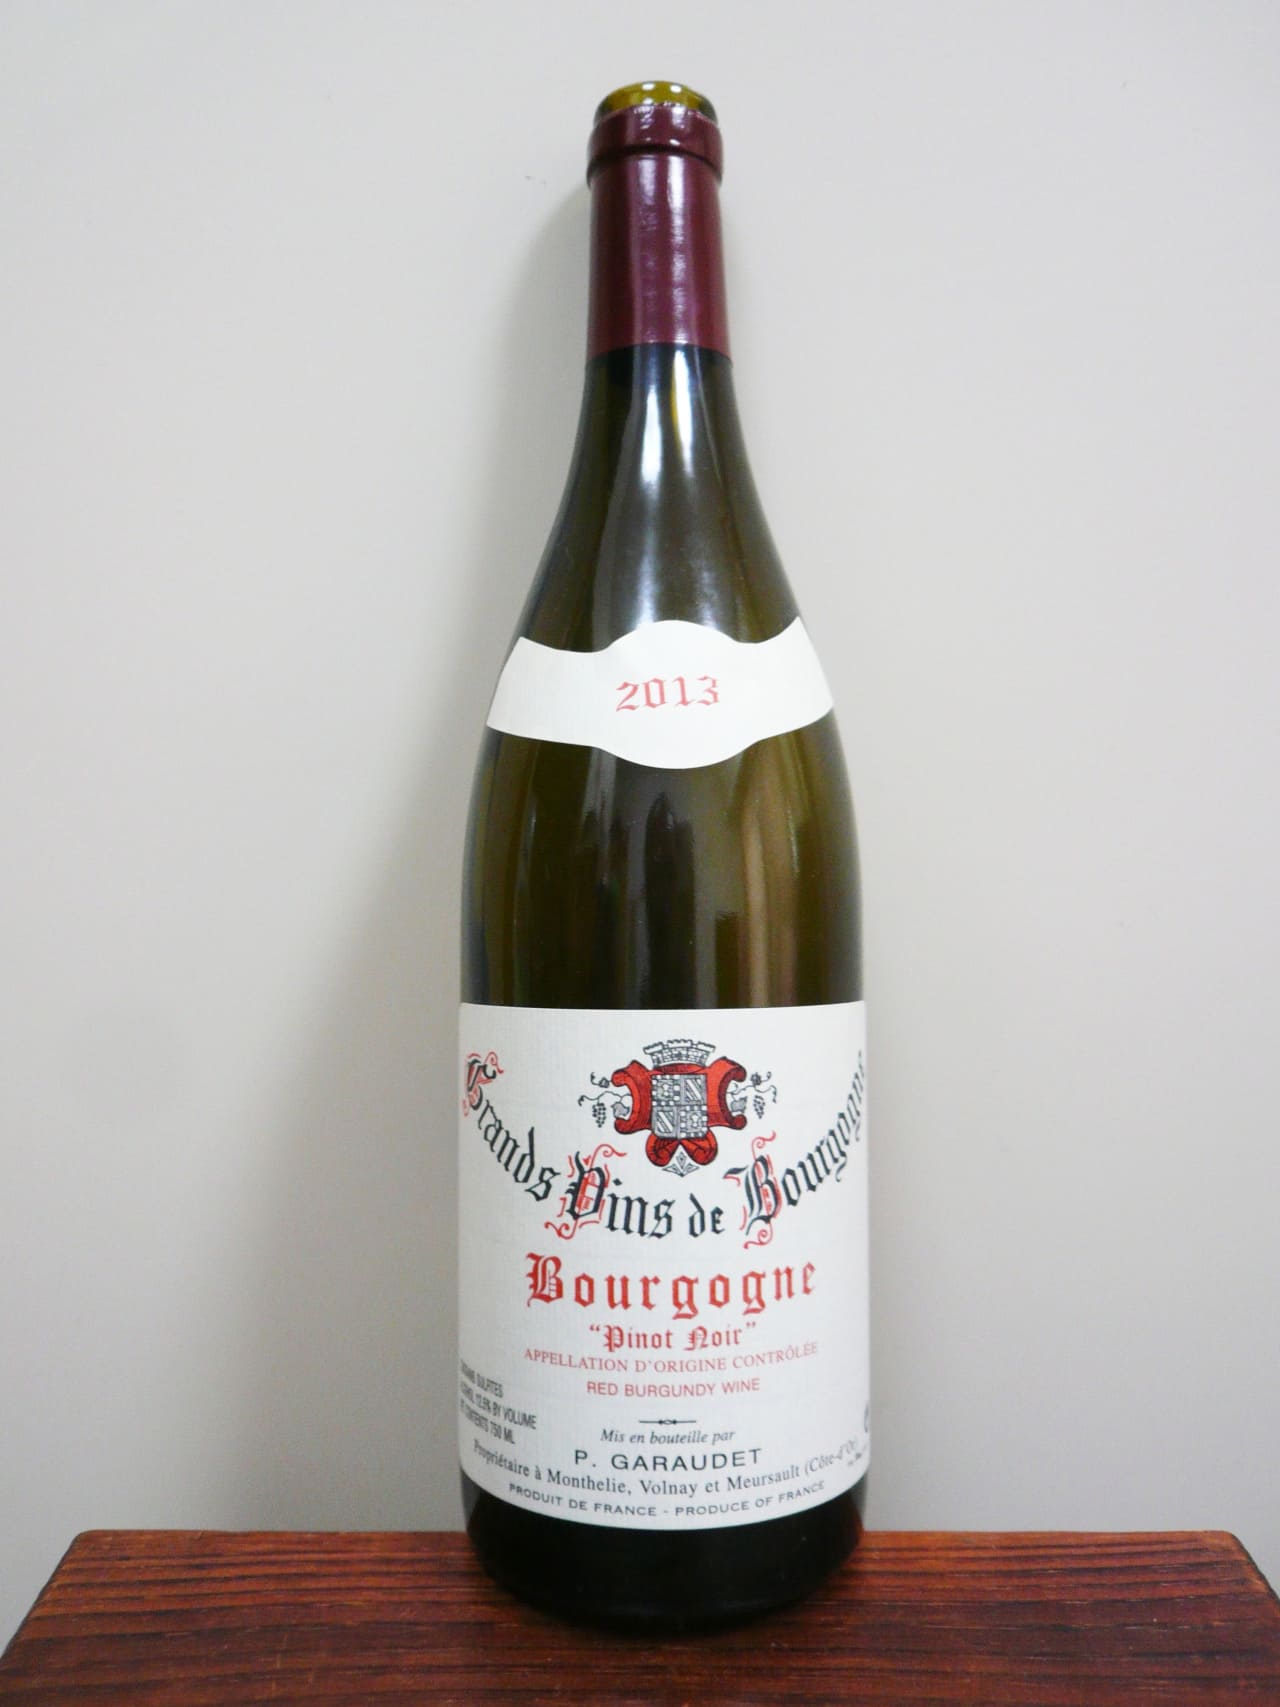 Paul Garaudet Bourgogne Pinot Noir